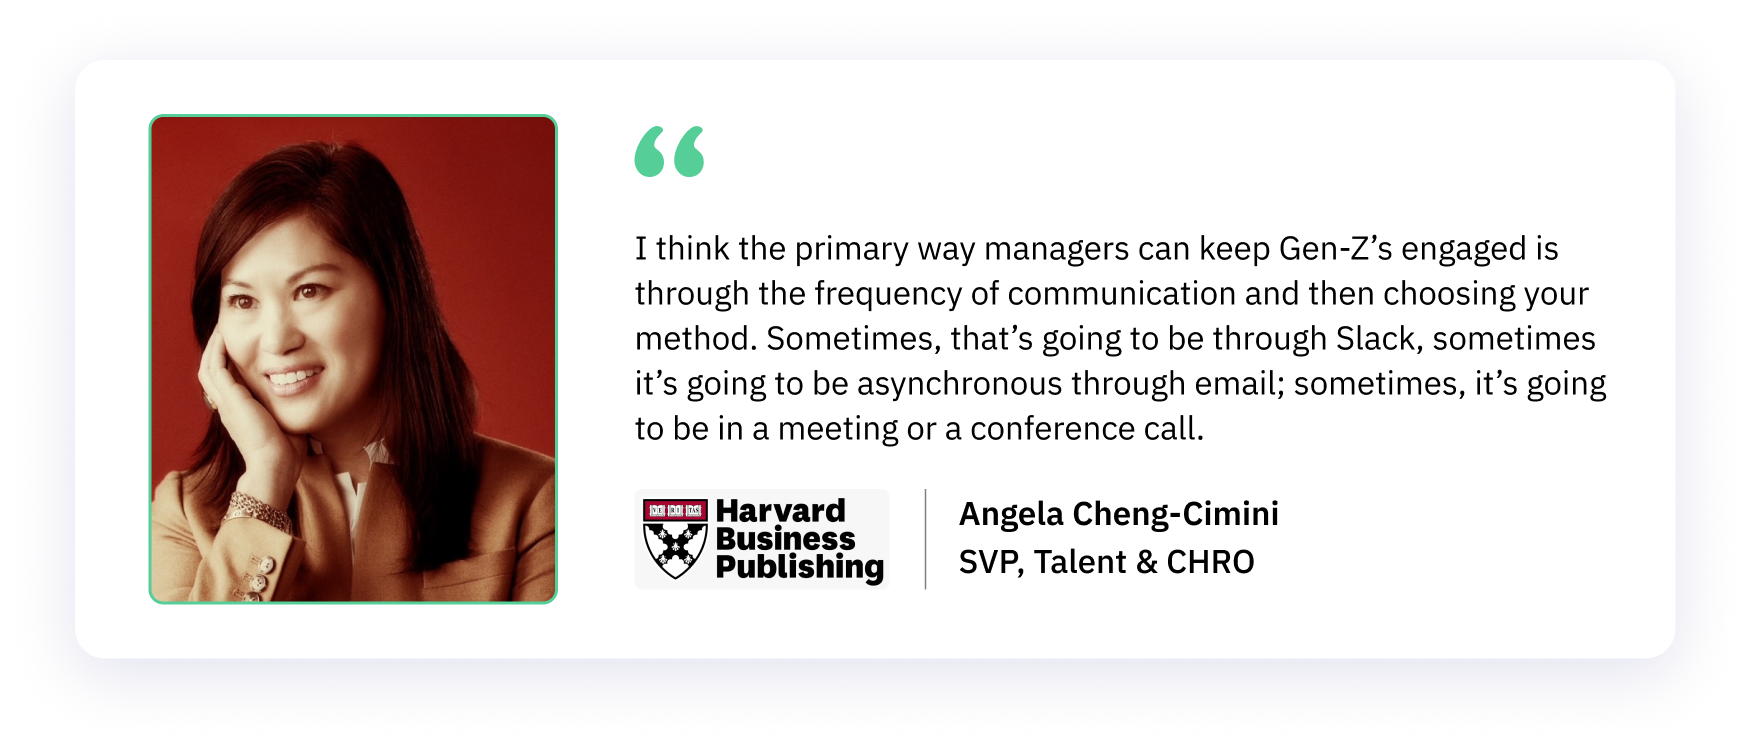 Angela Cheng-Cimini, SVP, Talent & CHRO